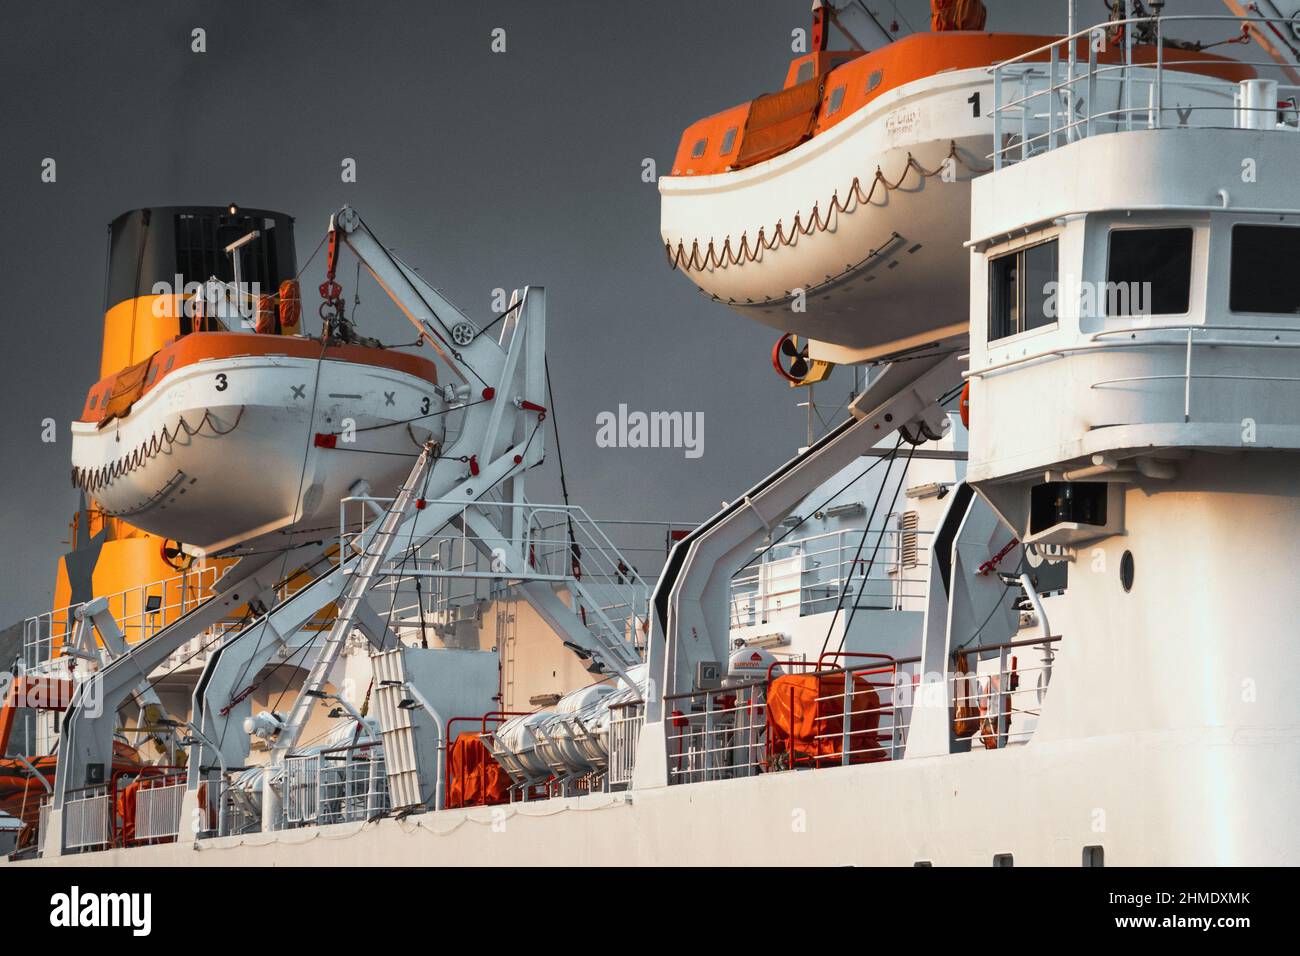 Rescue boats hanged on big passenger cruise ship Stock Photo